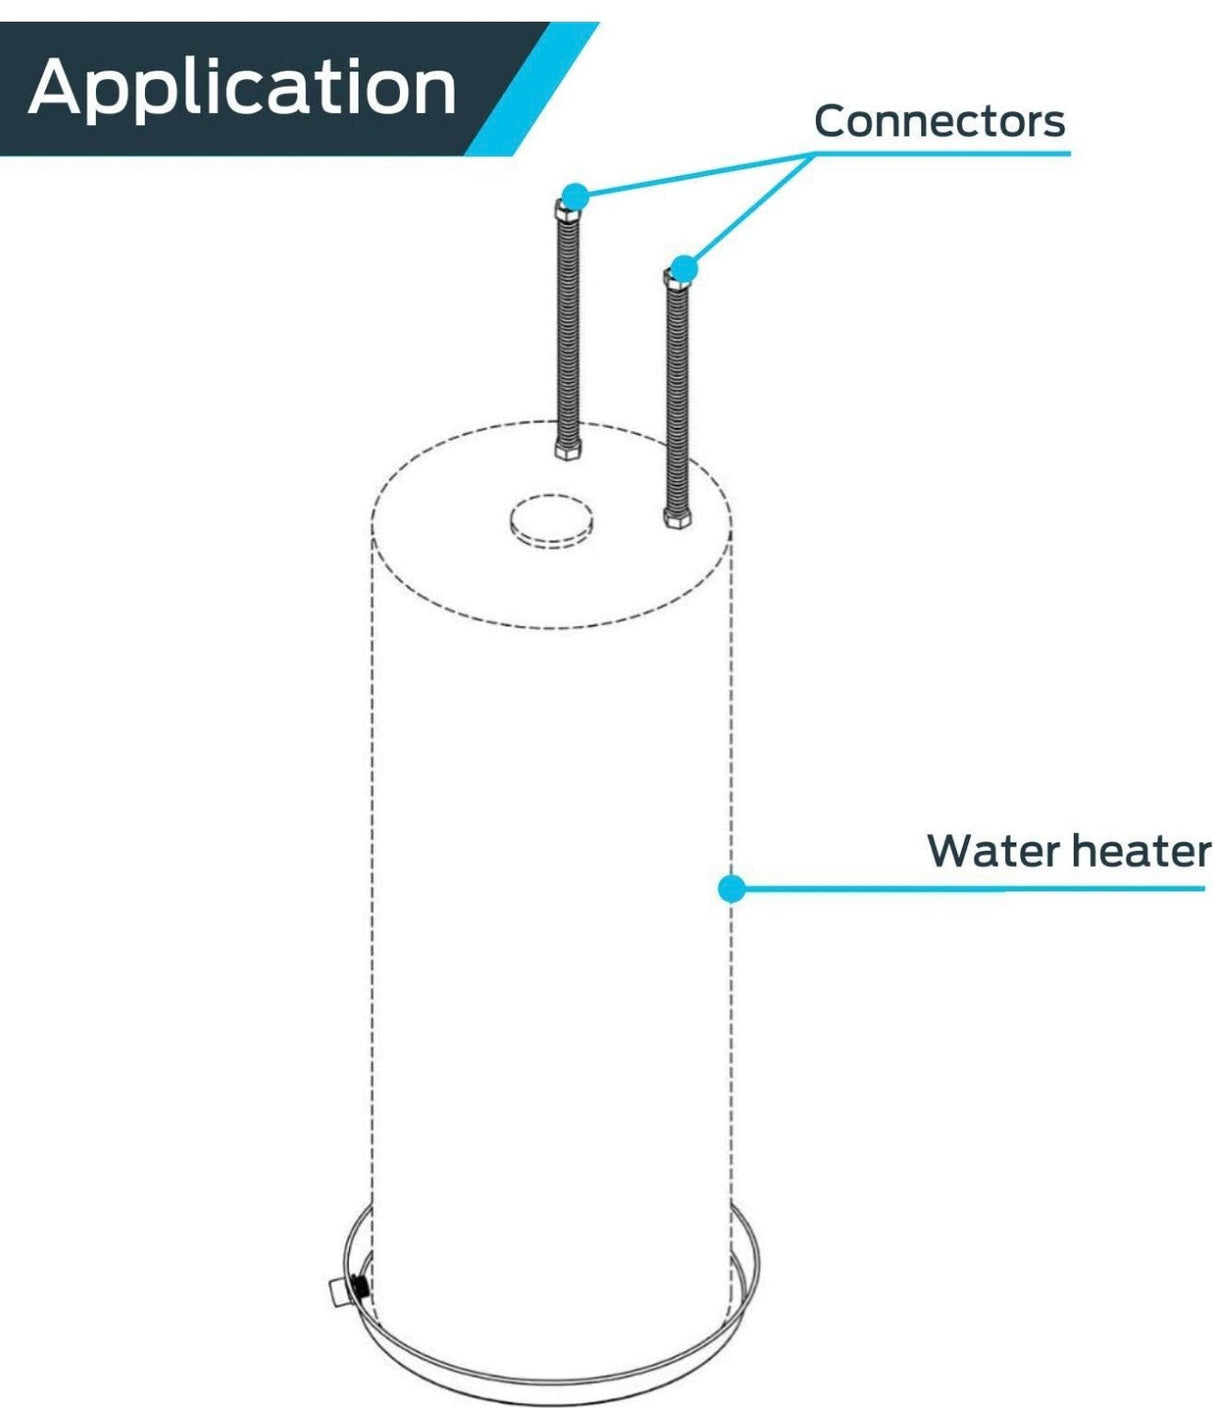 HoldRite QuickFlex 3/4 Inch FIP x 3/4 Inch FIP x 18 Inch Water Heater Connector